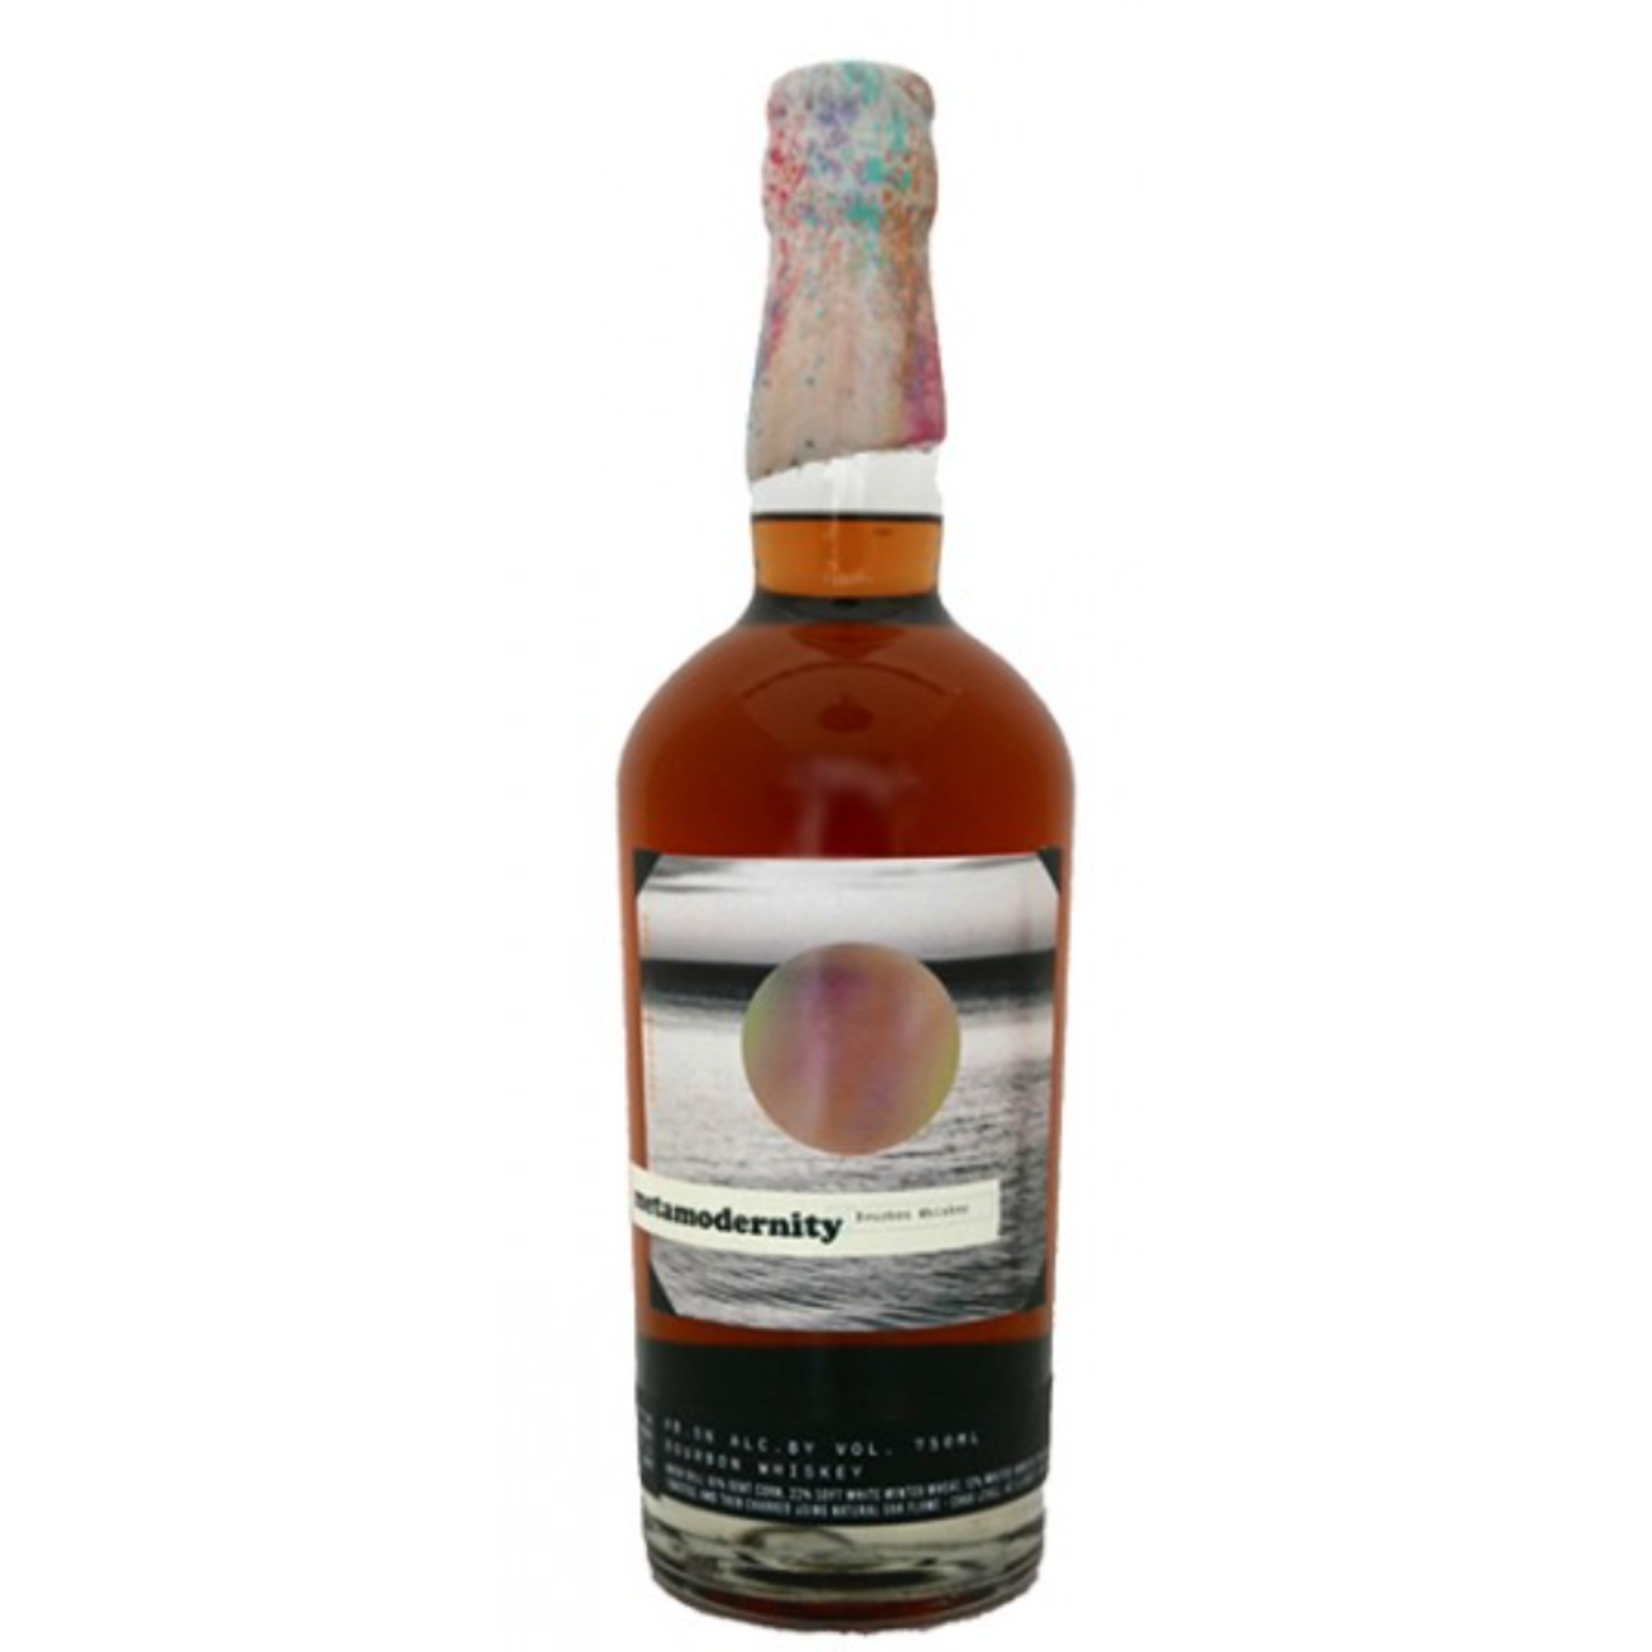 Matchbook Distilling, Metamodernity Bourbon Whiskey